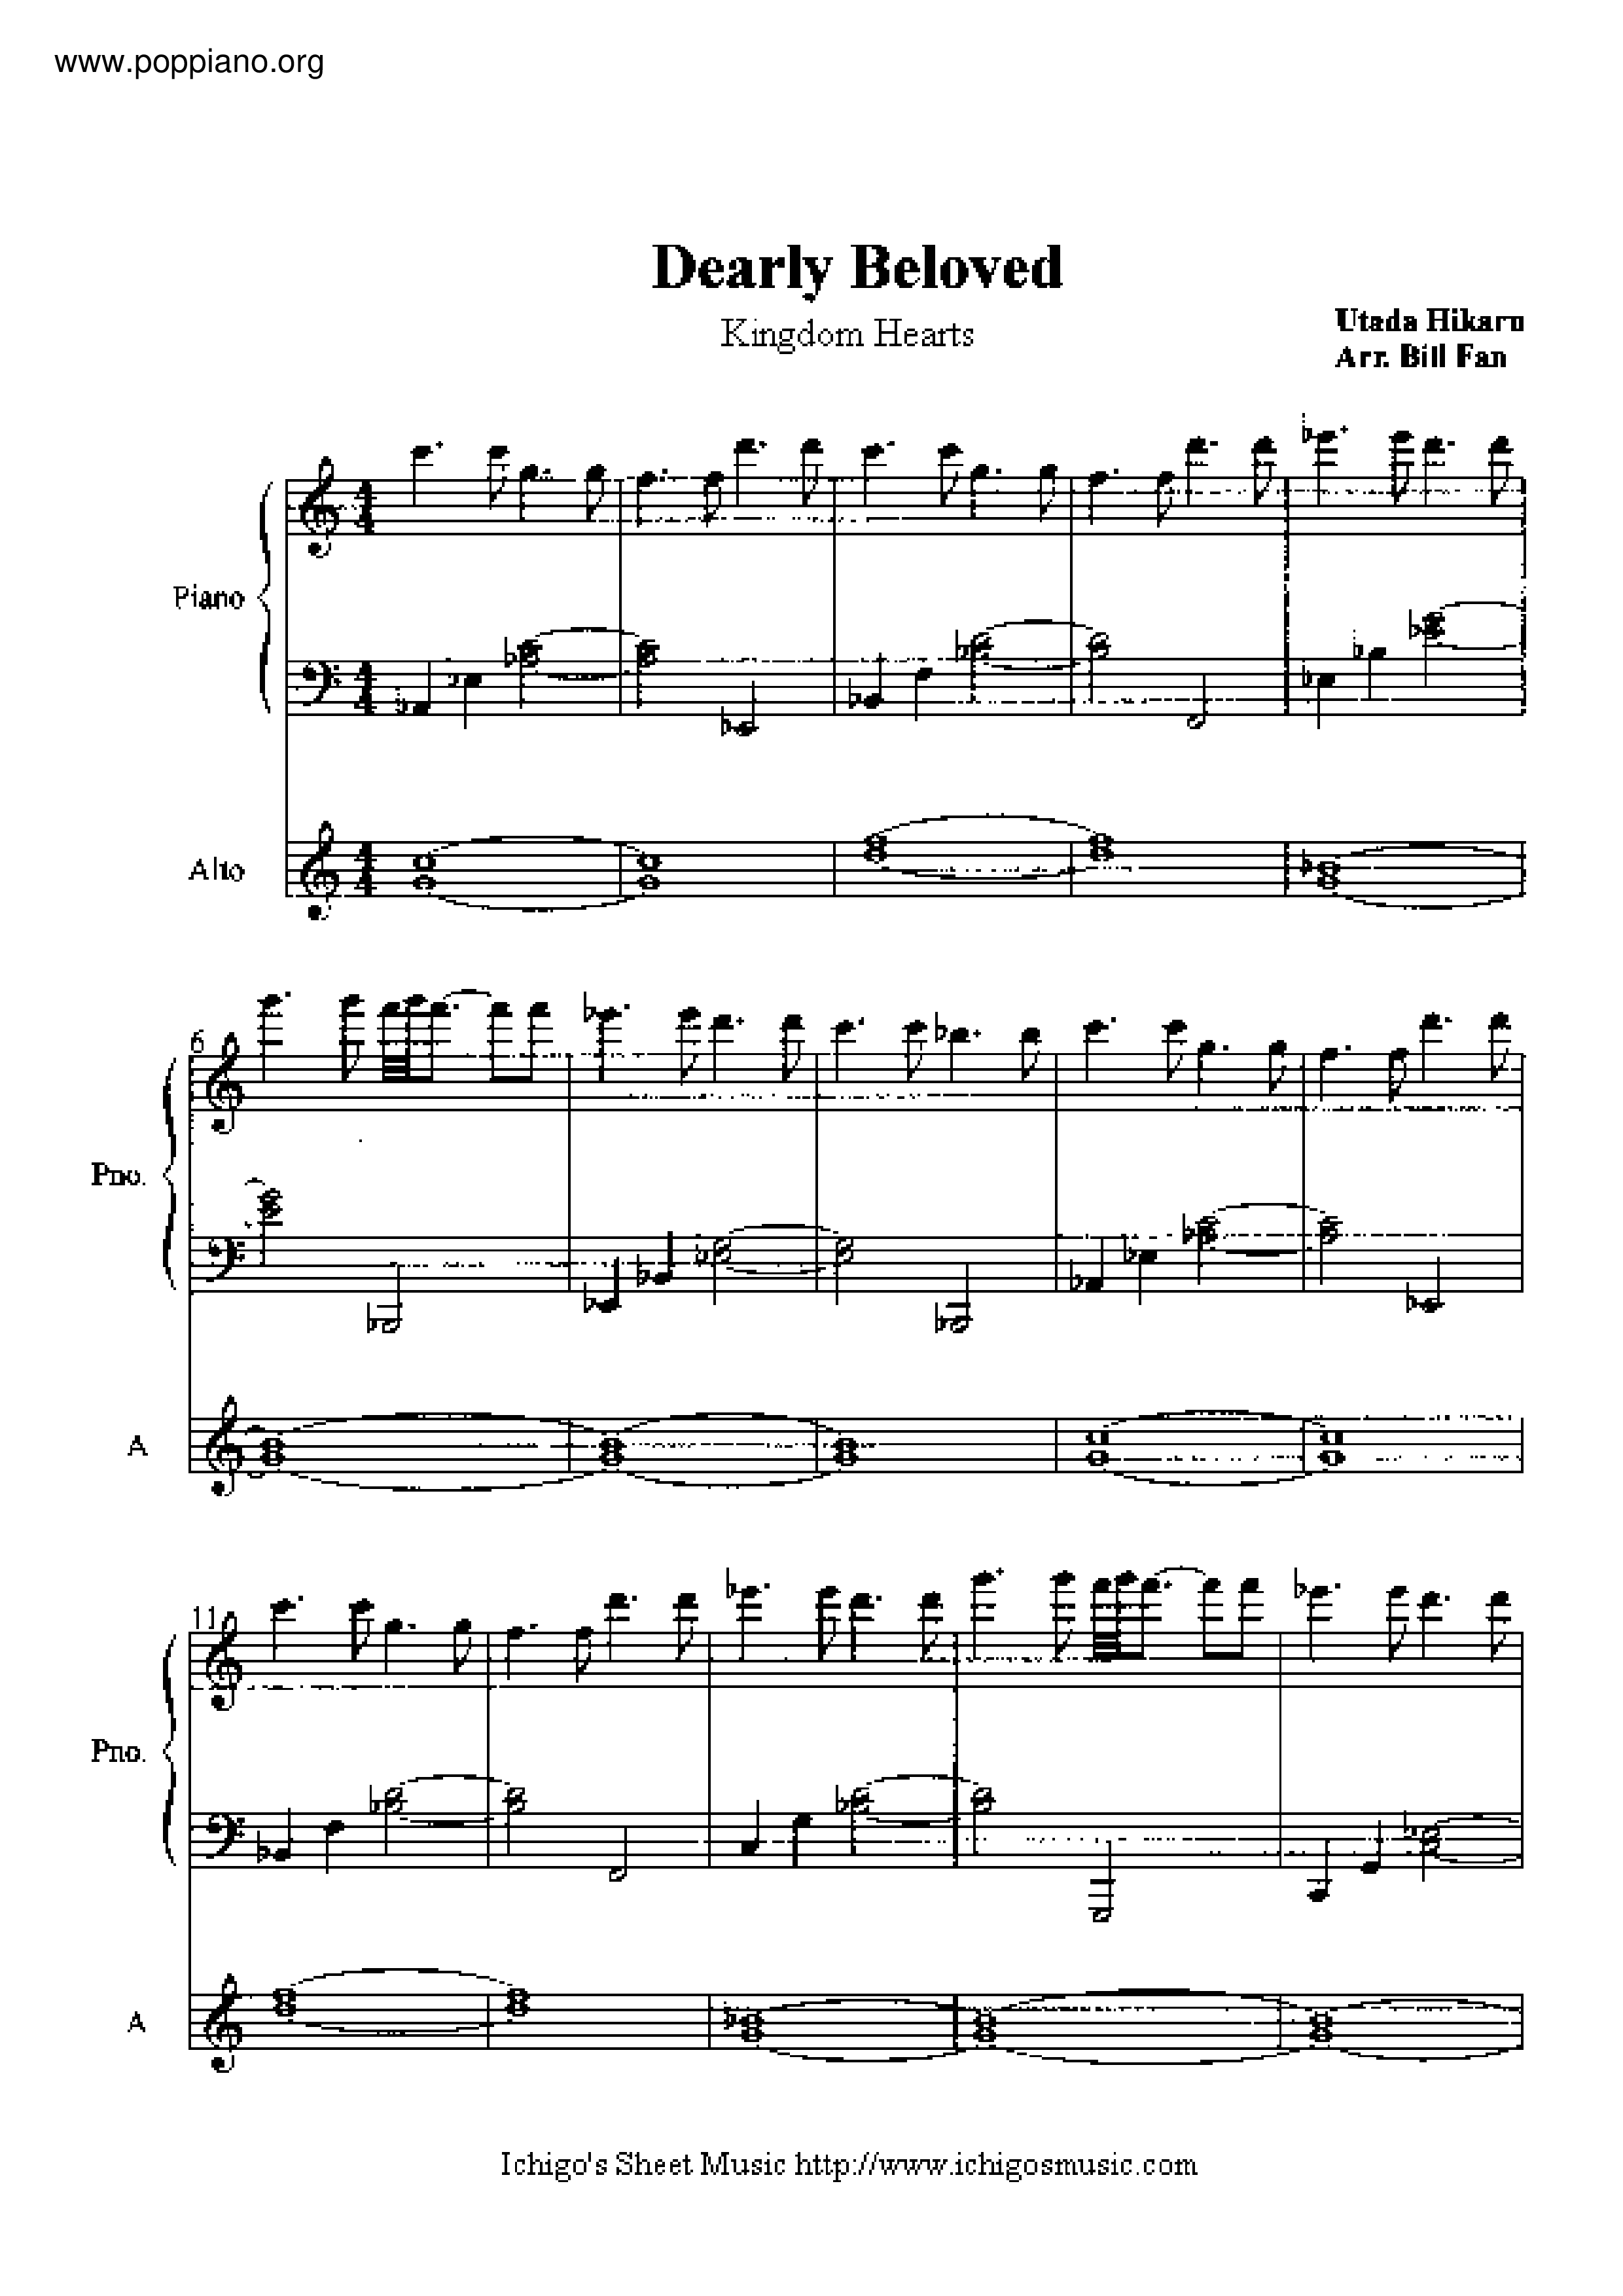 Productivo Más lejano Porcentaje ☆ Kingdom Hearts-Dearly Beloved Sheet Music pdf, - Free Score Download ☆